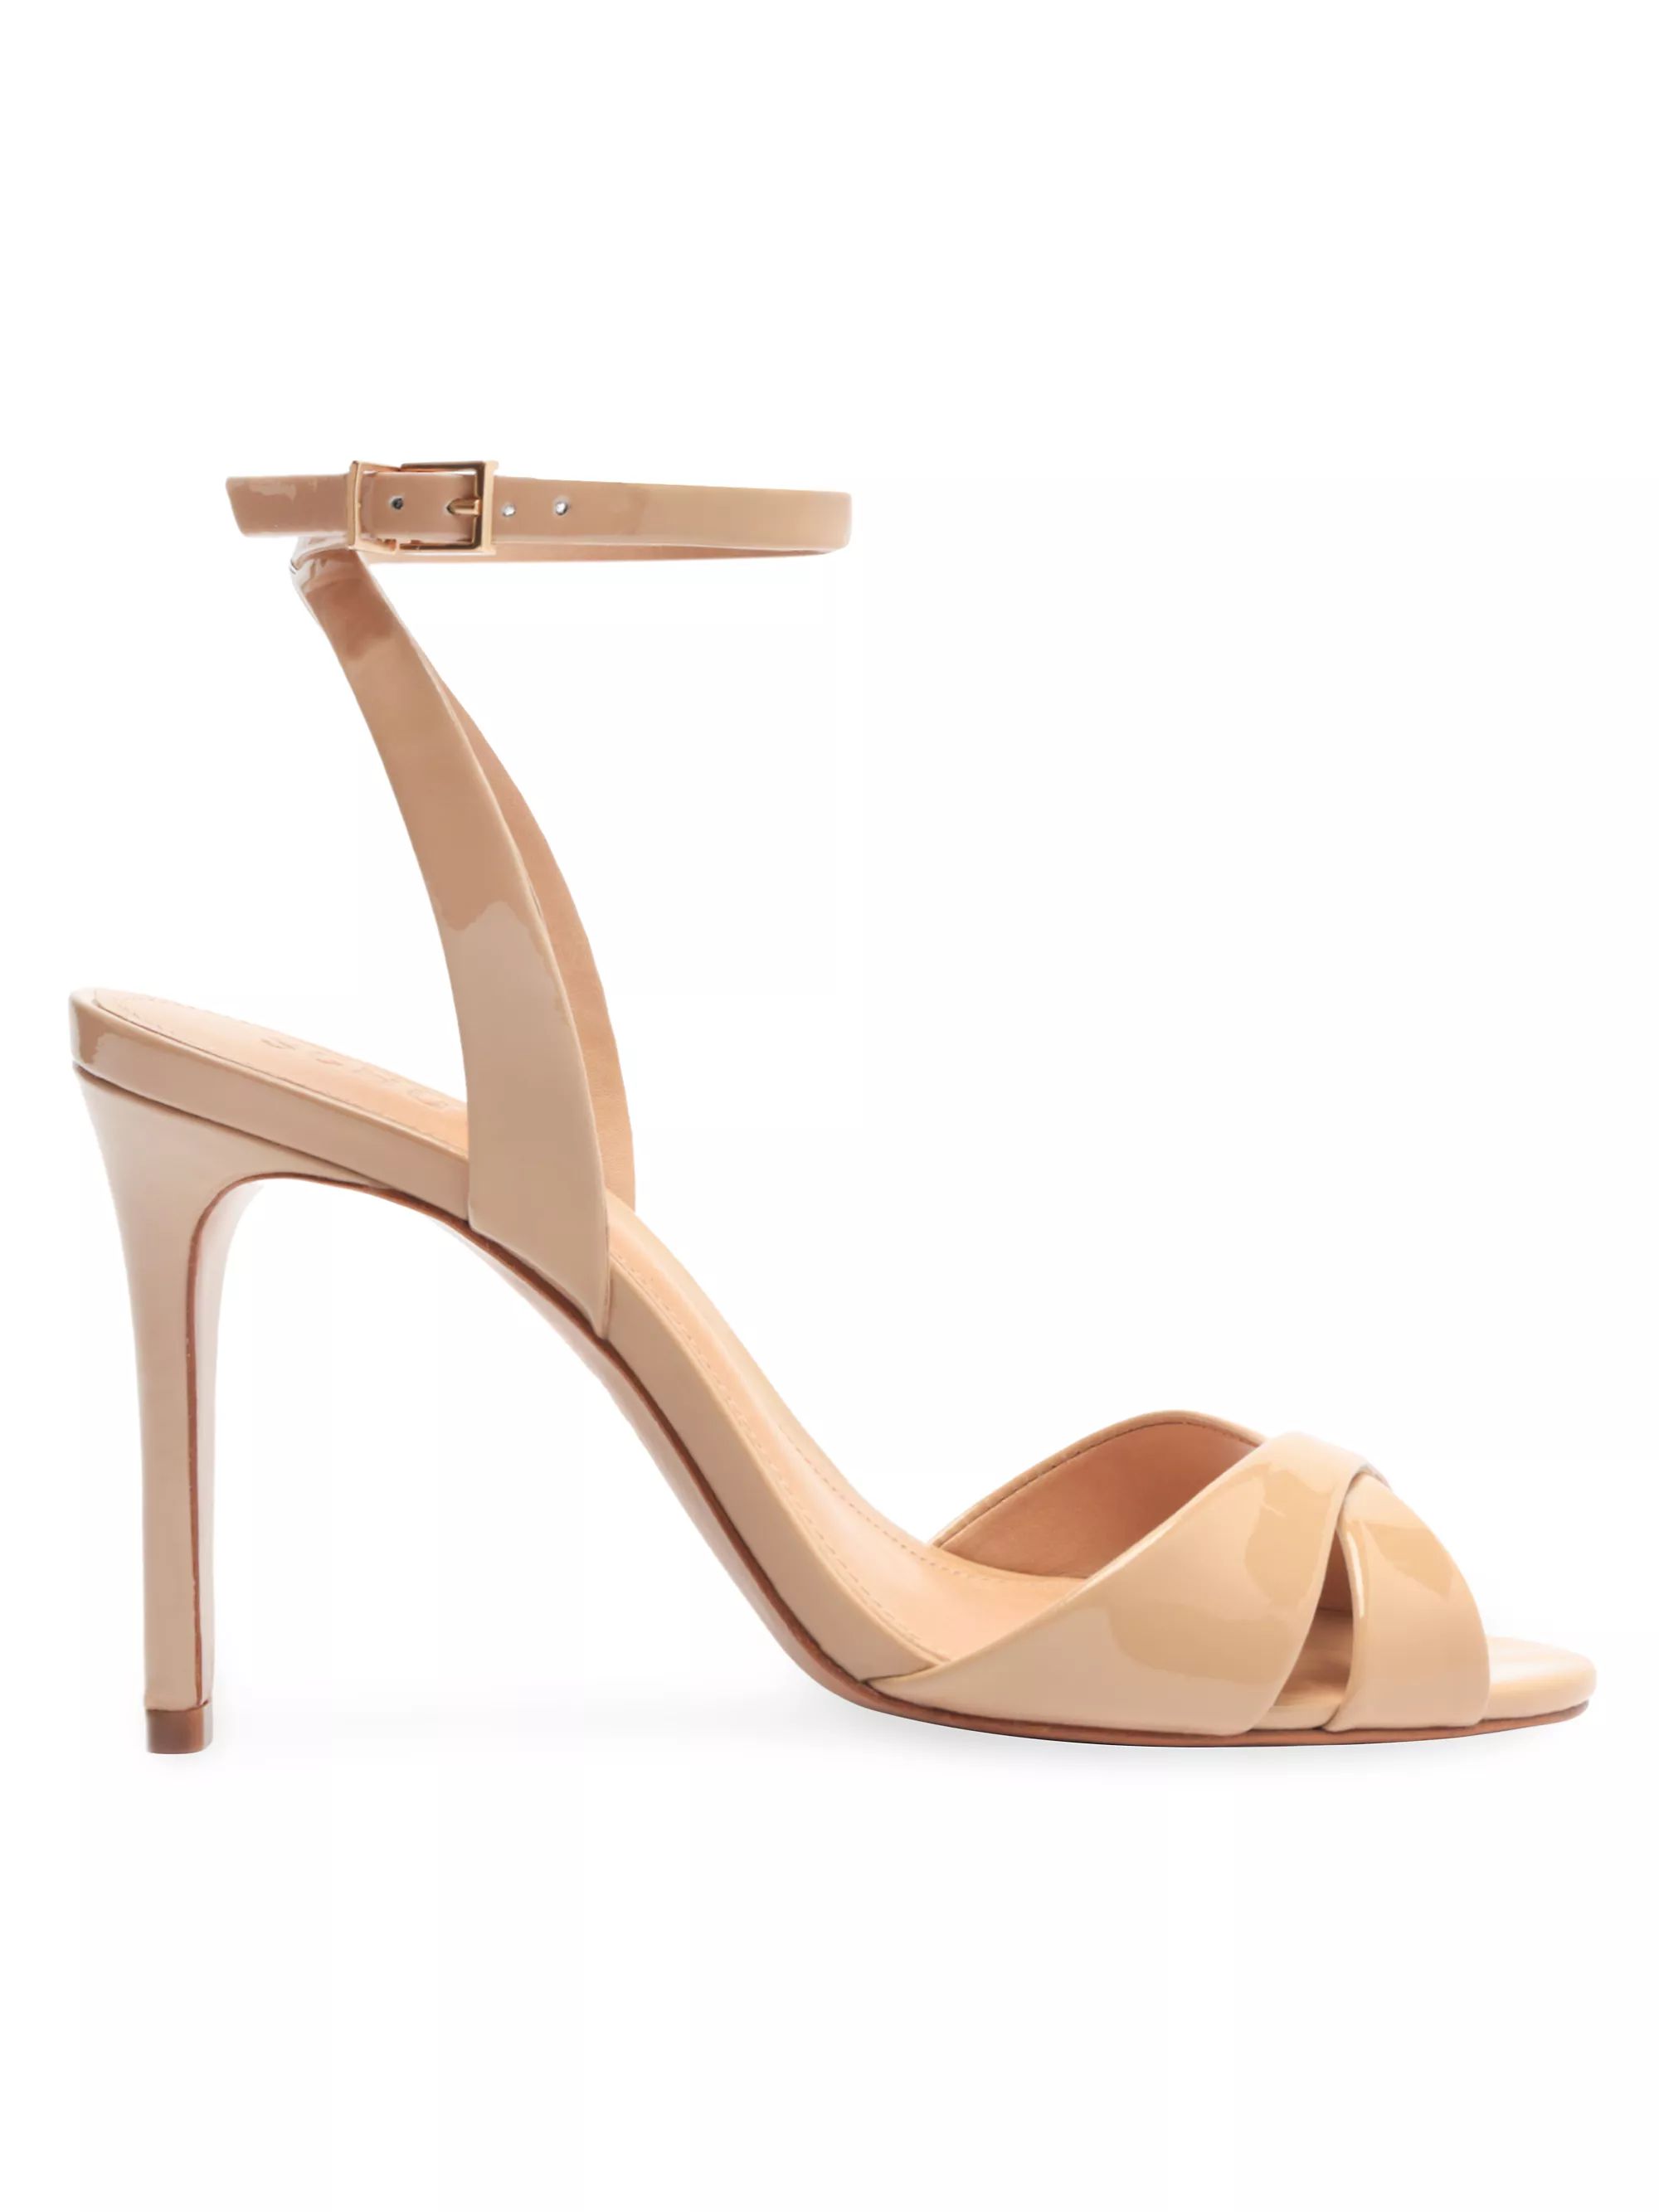 Hilda 100MM Patent Leather Sandals | Saks Fifth Avenue